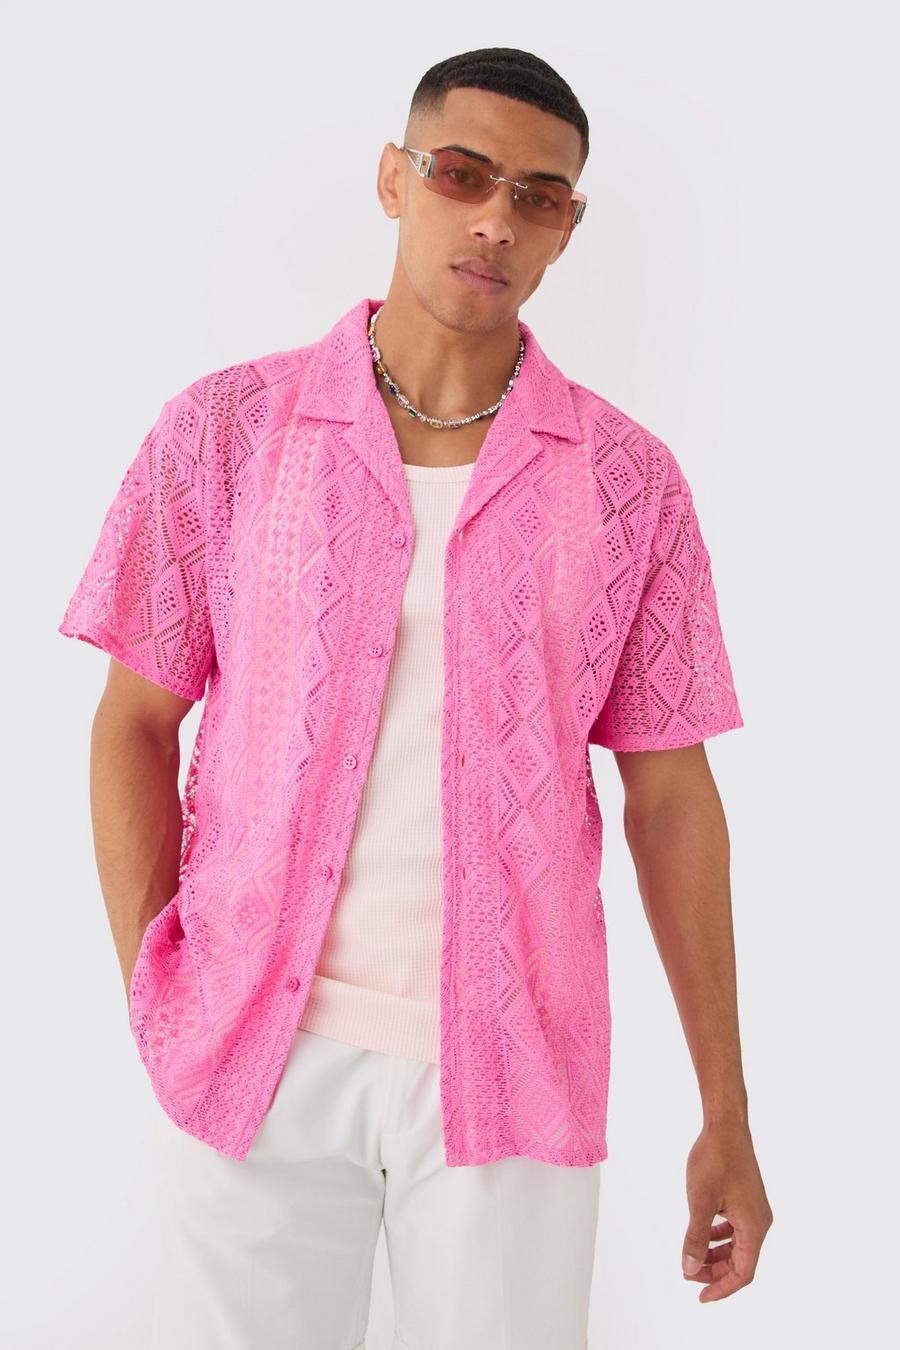 Hot pink Boxy Crochet Look Shirt 